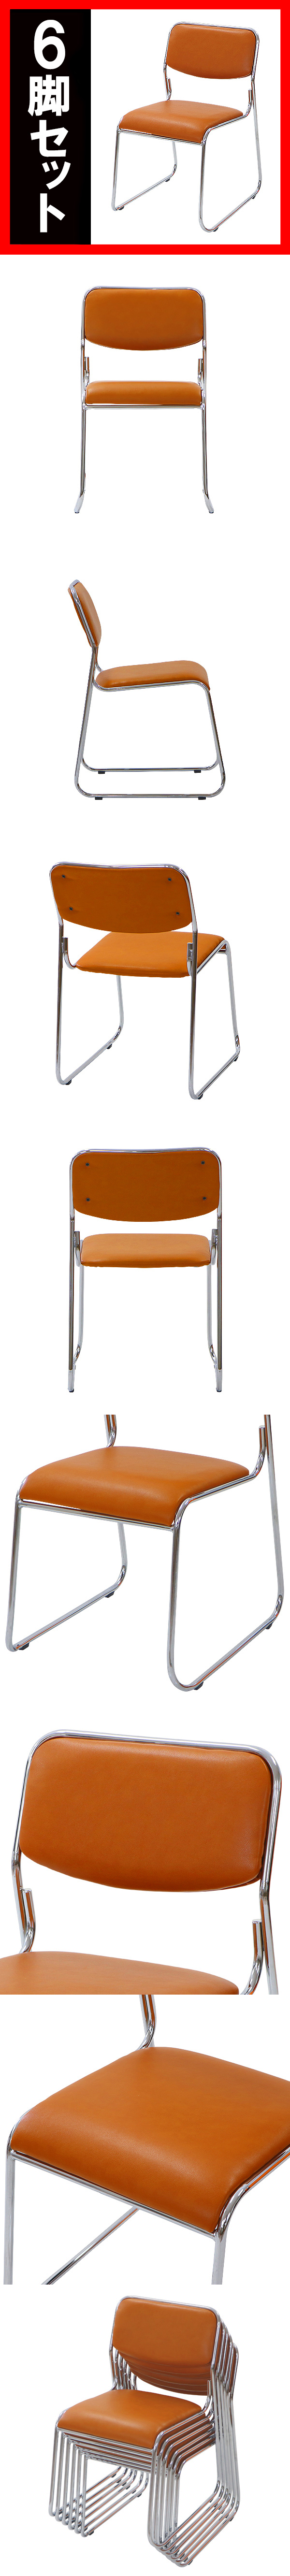 SALE大人気送料無料 6脚セット ミーティングチェア 会議イス 会議椅子 スタッキングチェア パイプチェア パイプイス パイプ椅子 キャメル パイプイス